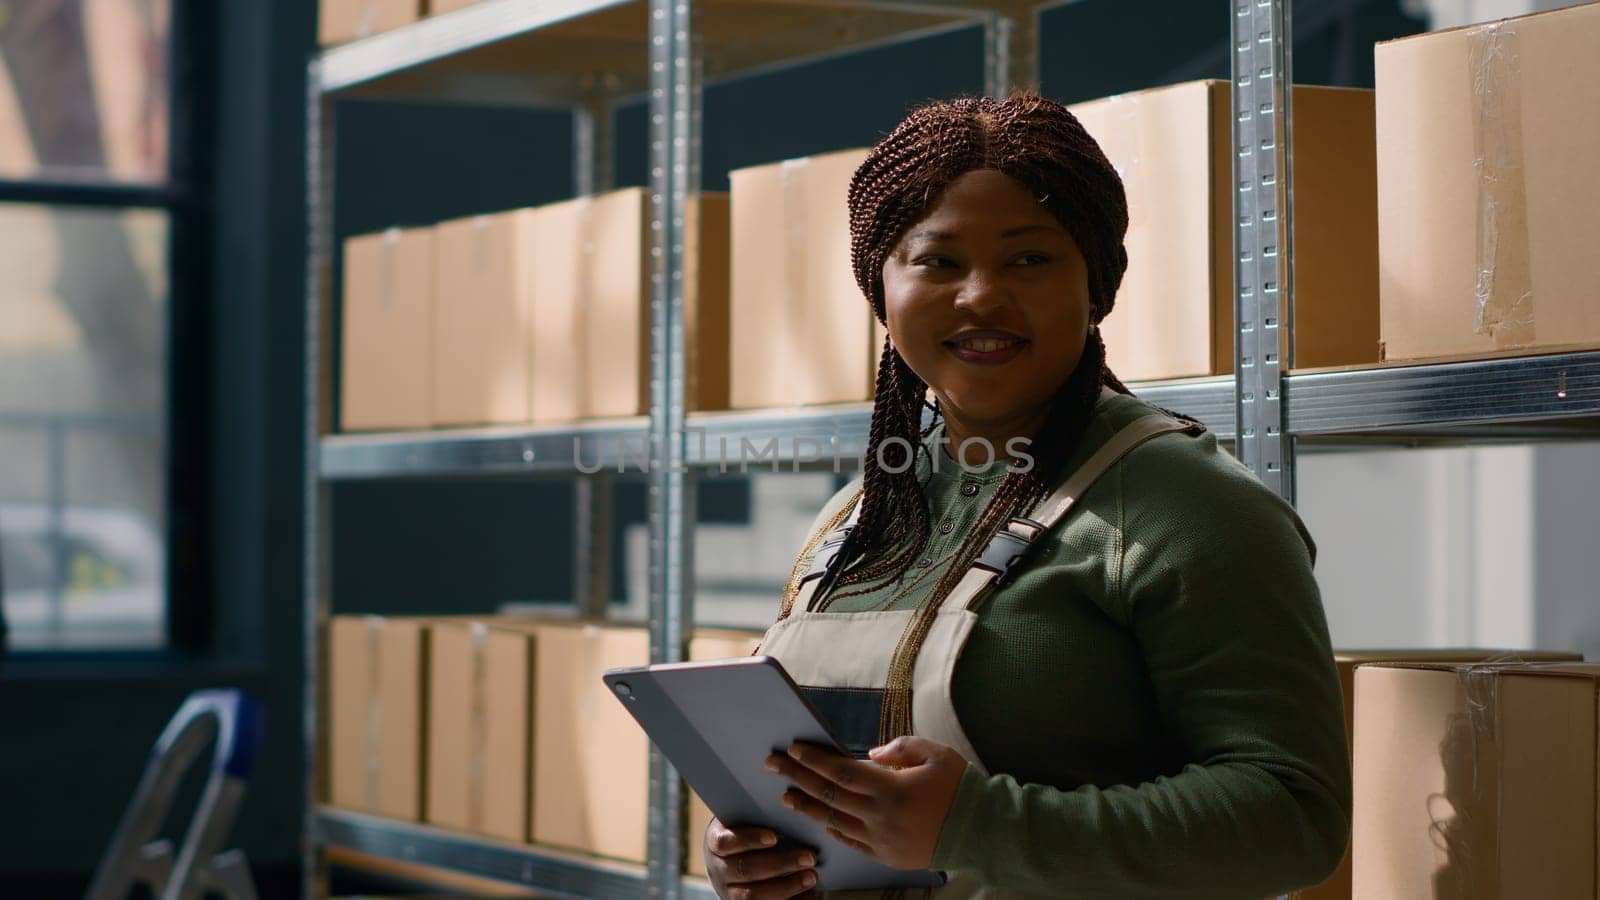 Warehouse supervisor holding tablet by DCStudio